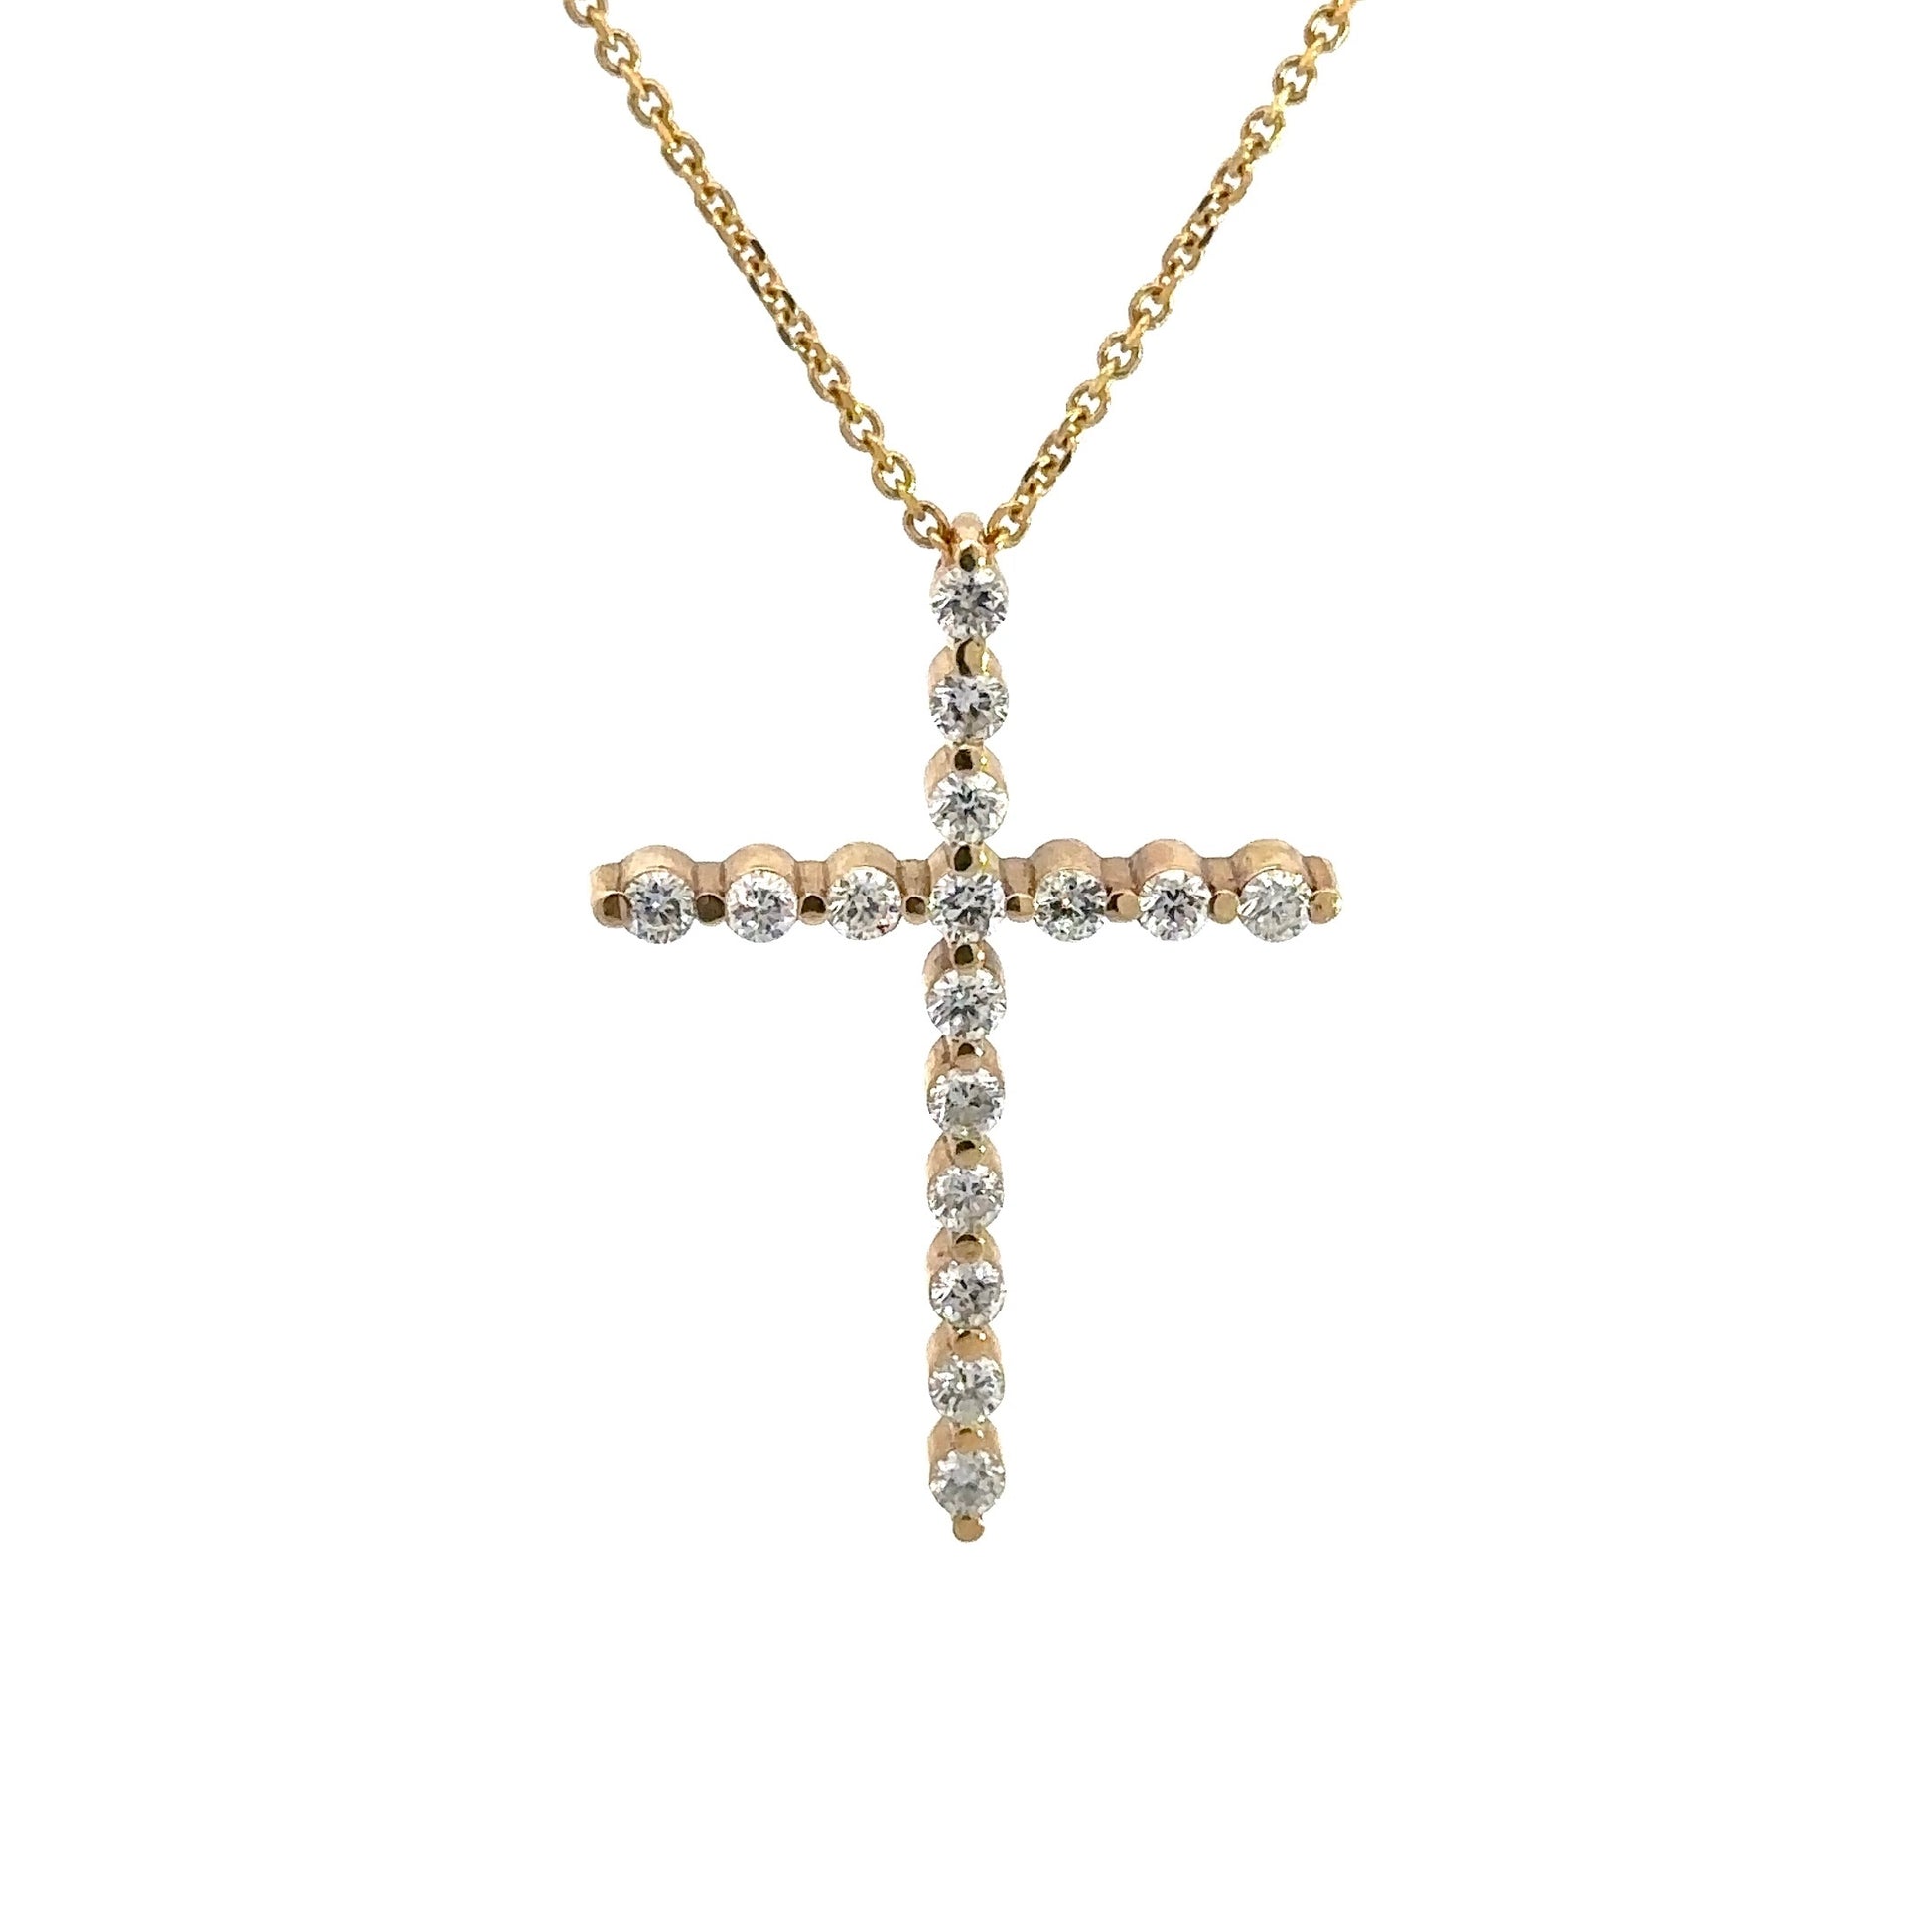 Front of diamond cross necklace with 16 round diamonds